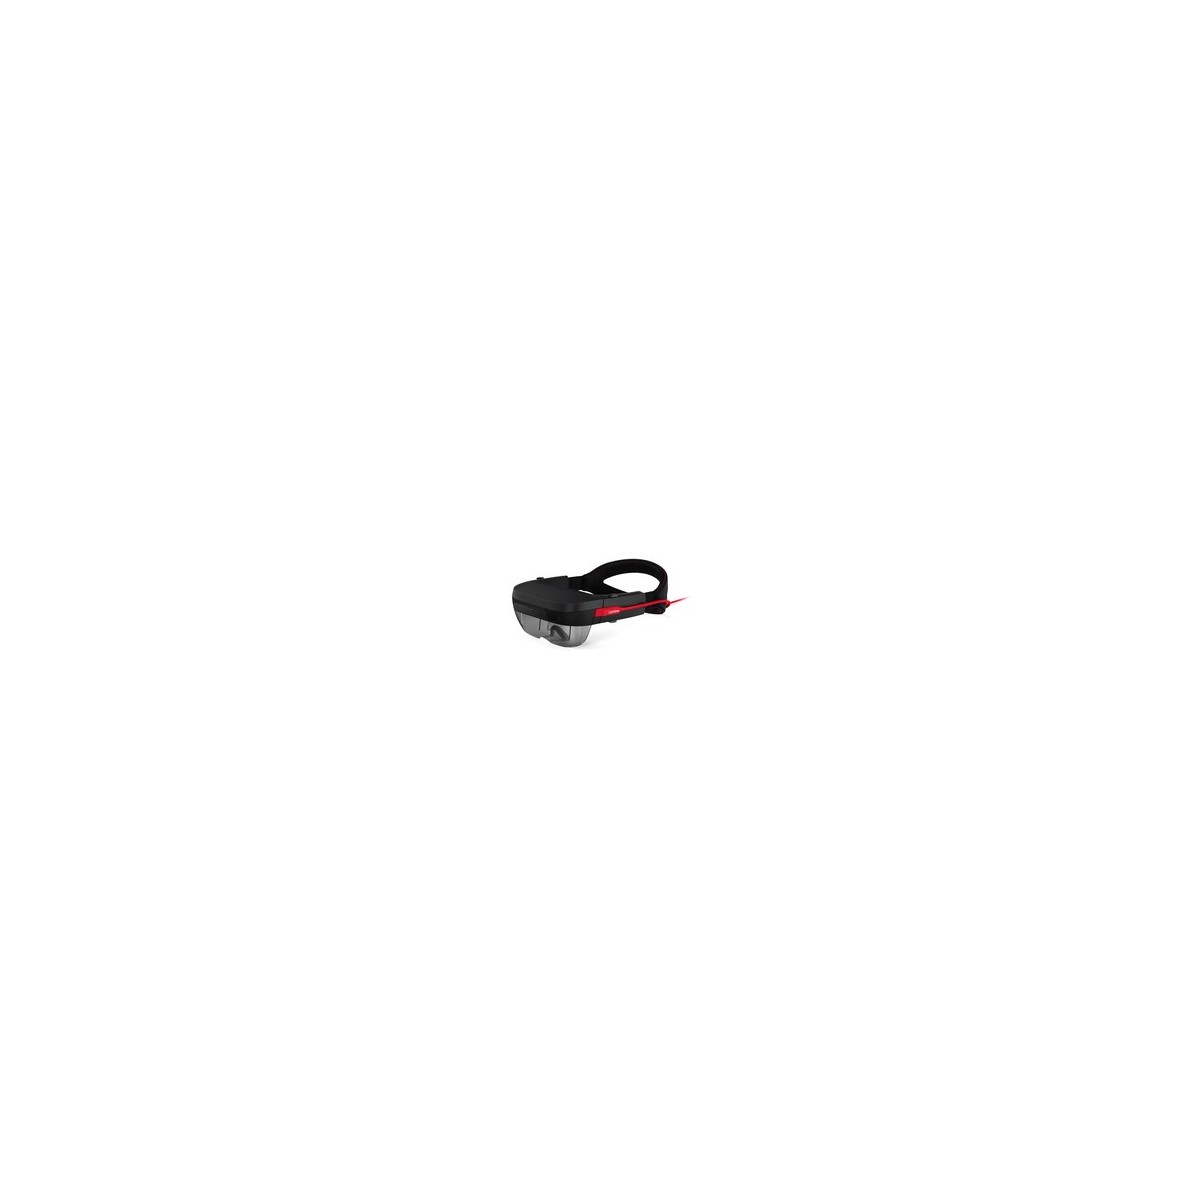 Lenovo ThinkReality A6 - Dedicated head mounted display - Black - 40° - USB Type-C - Qualcomm - Qualcomm Snapdragon